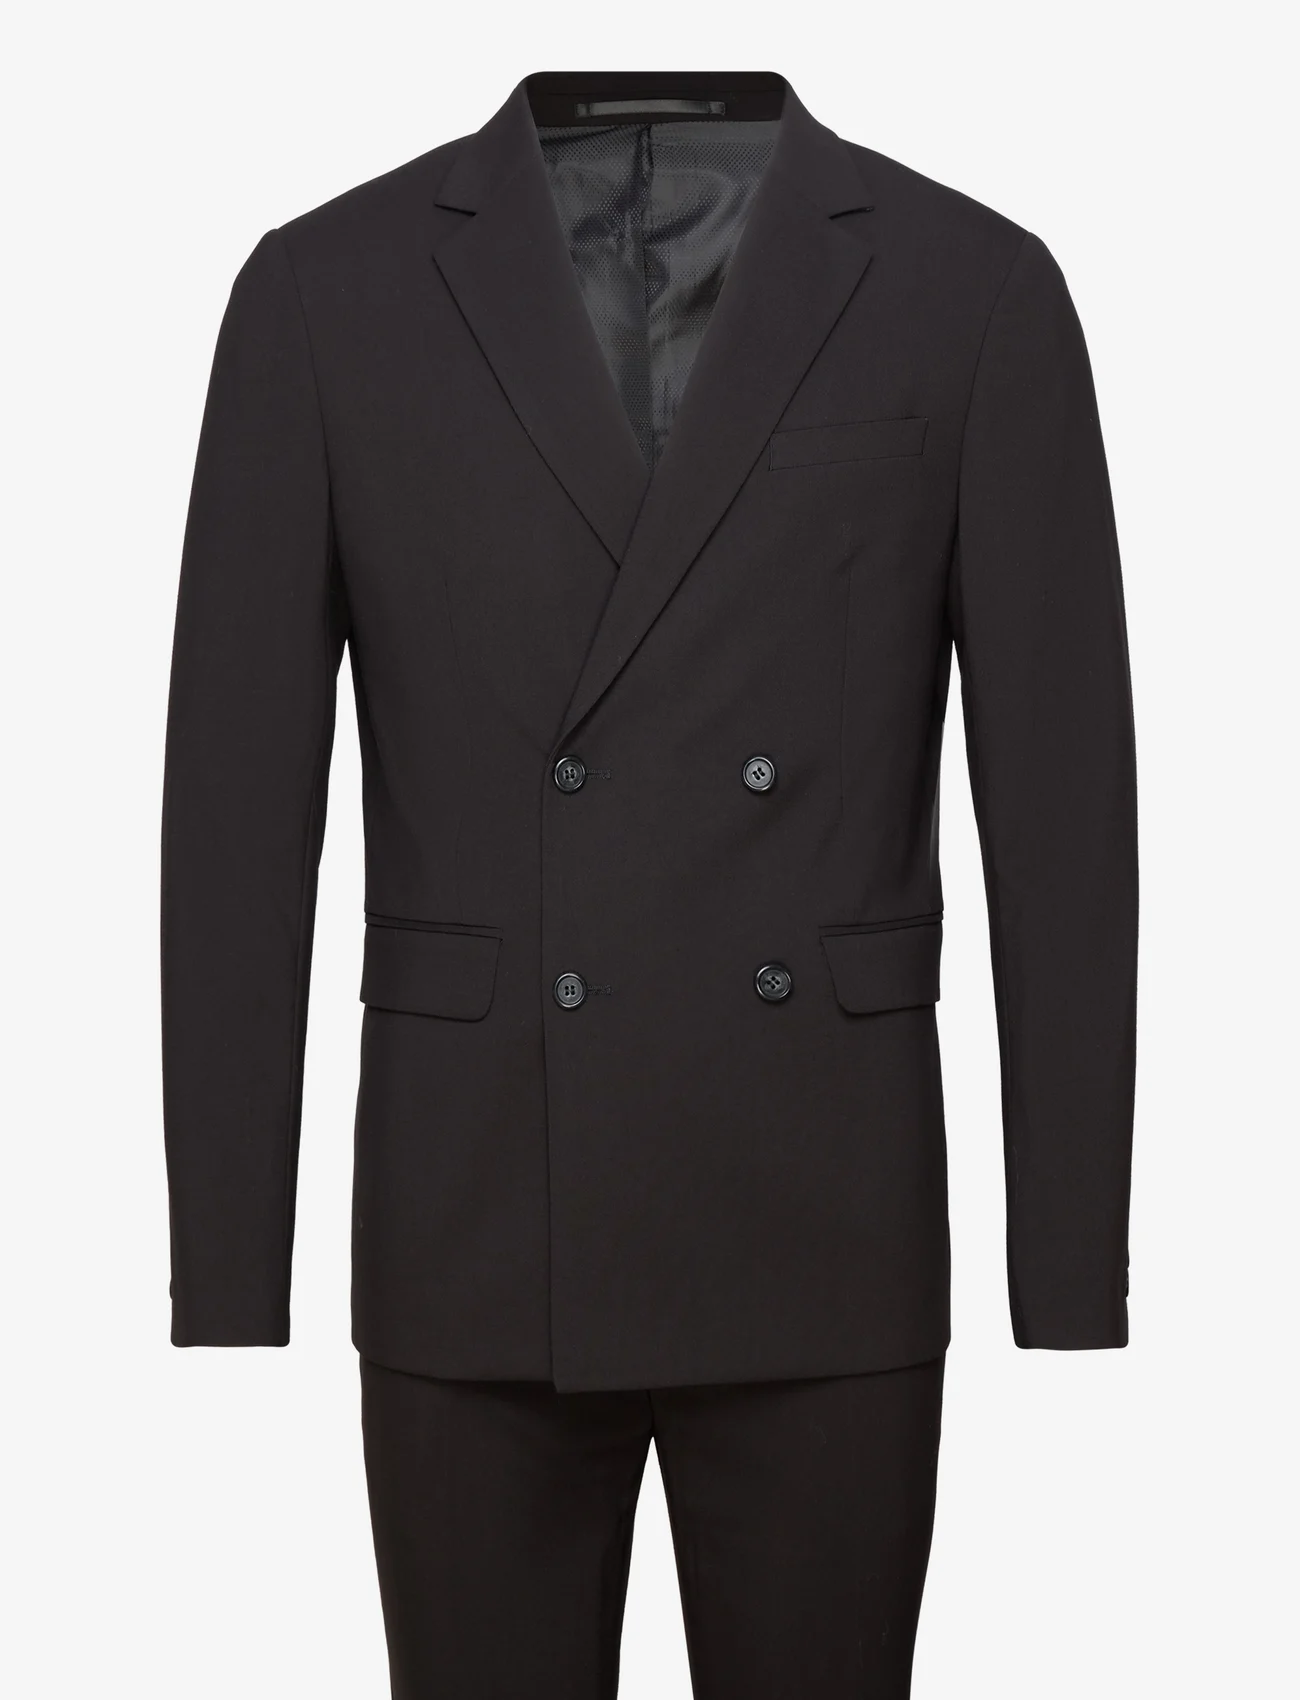 Lindbergh - Plain DB mens suit - normal lenght - kostuums met dubbele knopen - black - 0